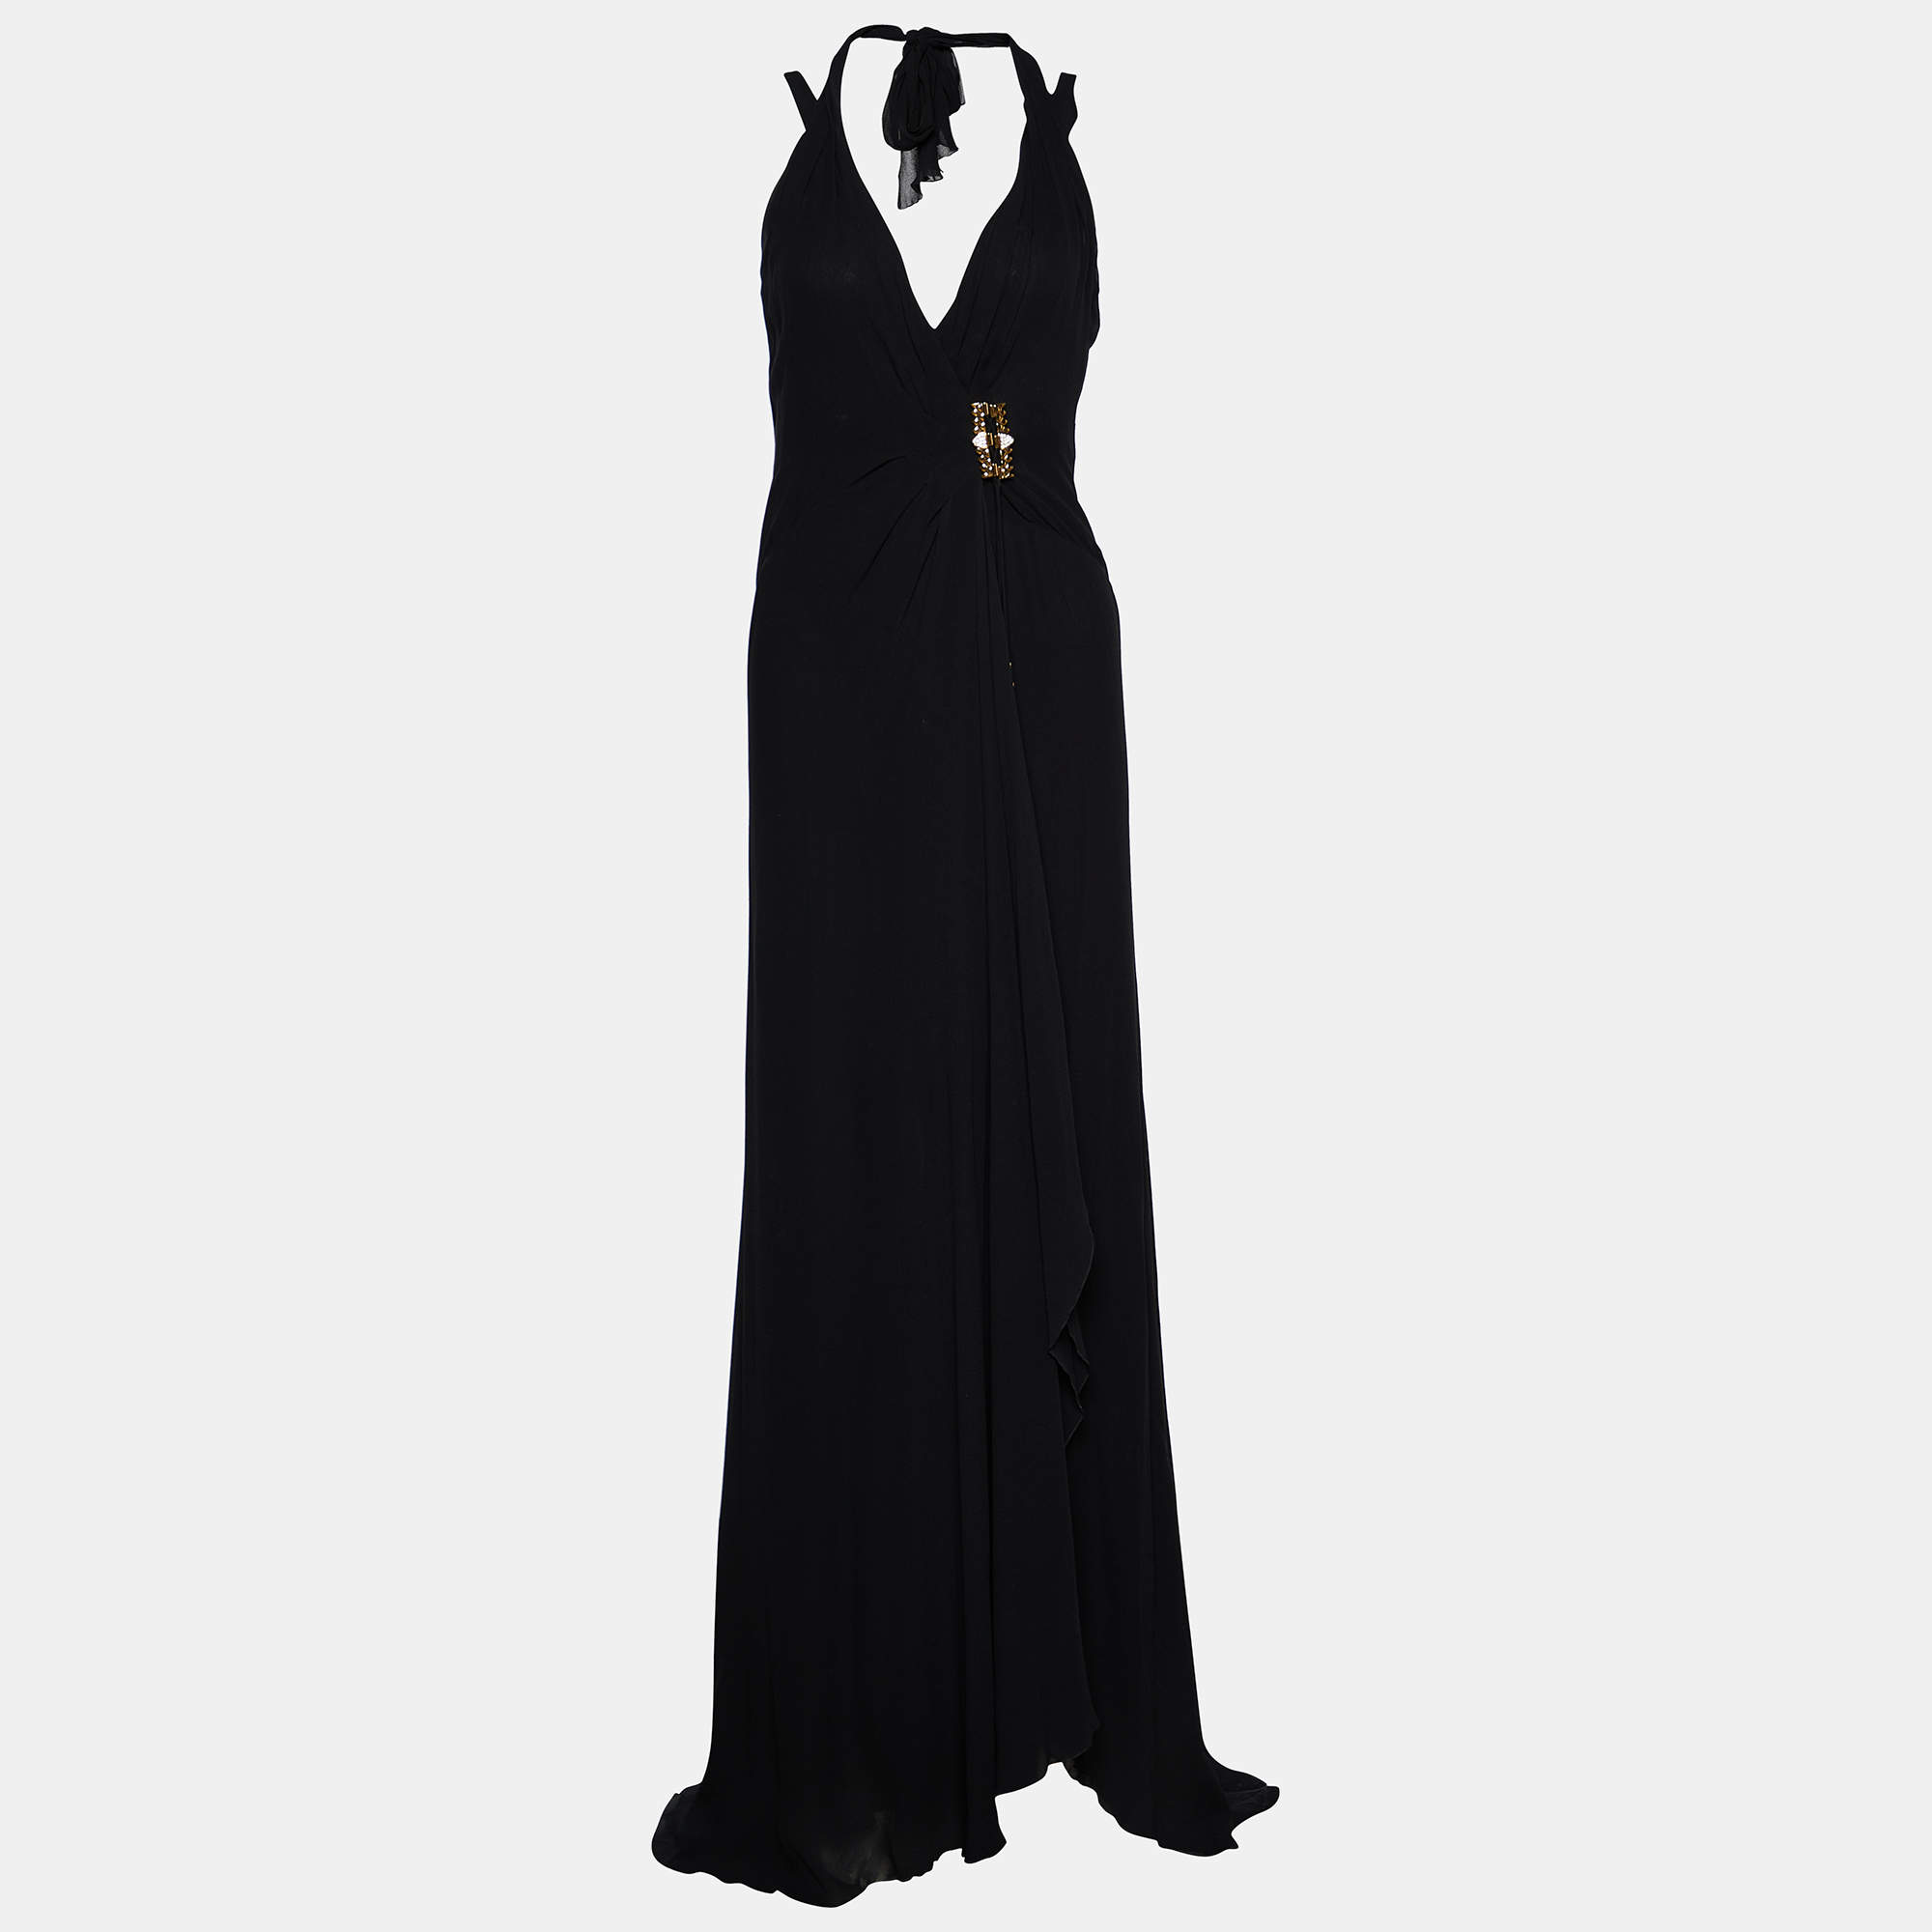 designer black gowns morticia addams style